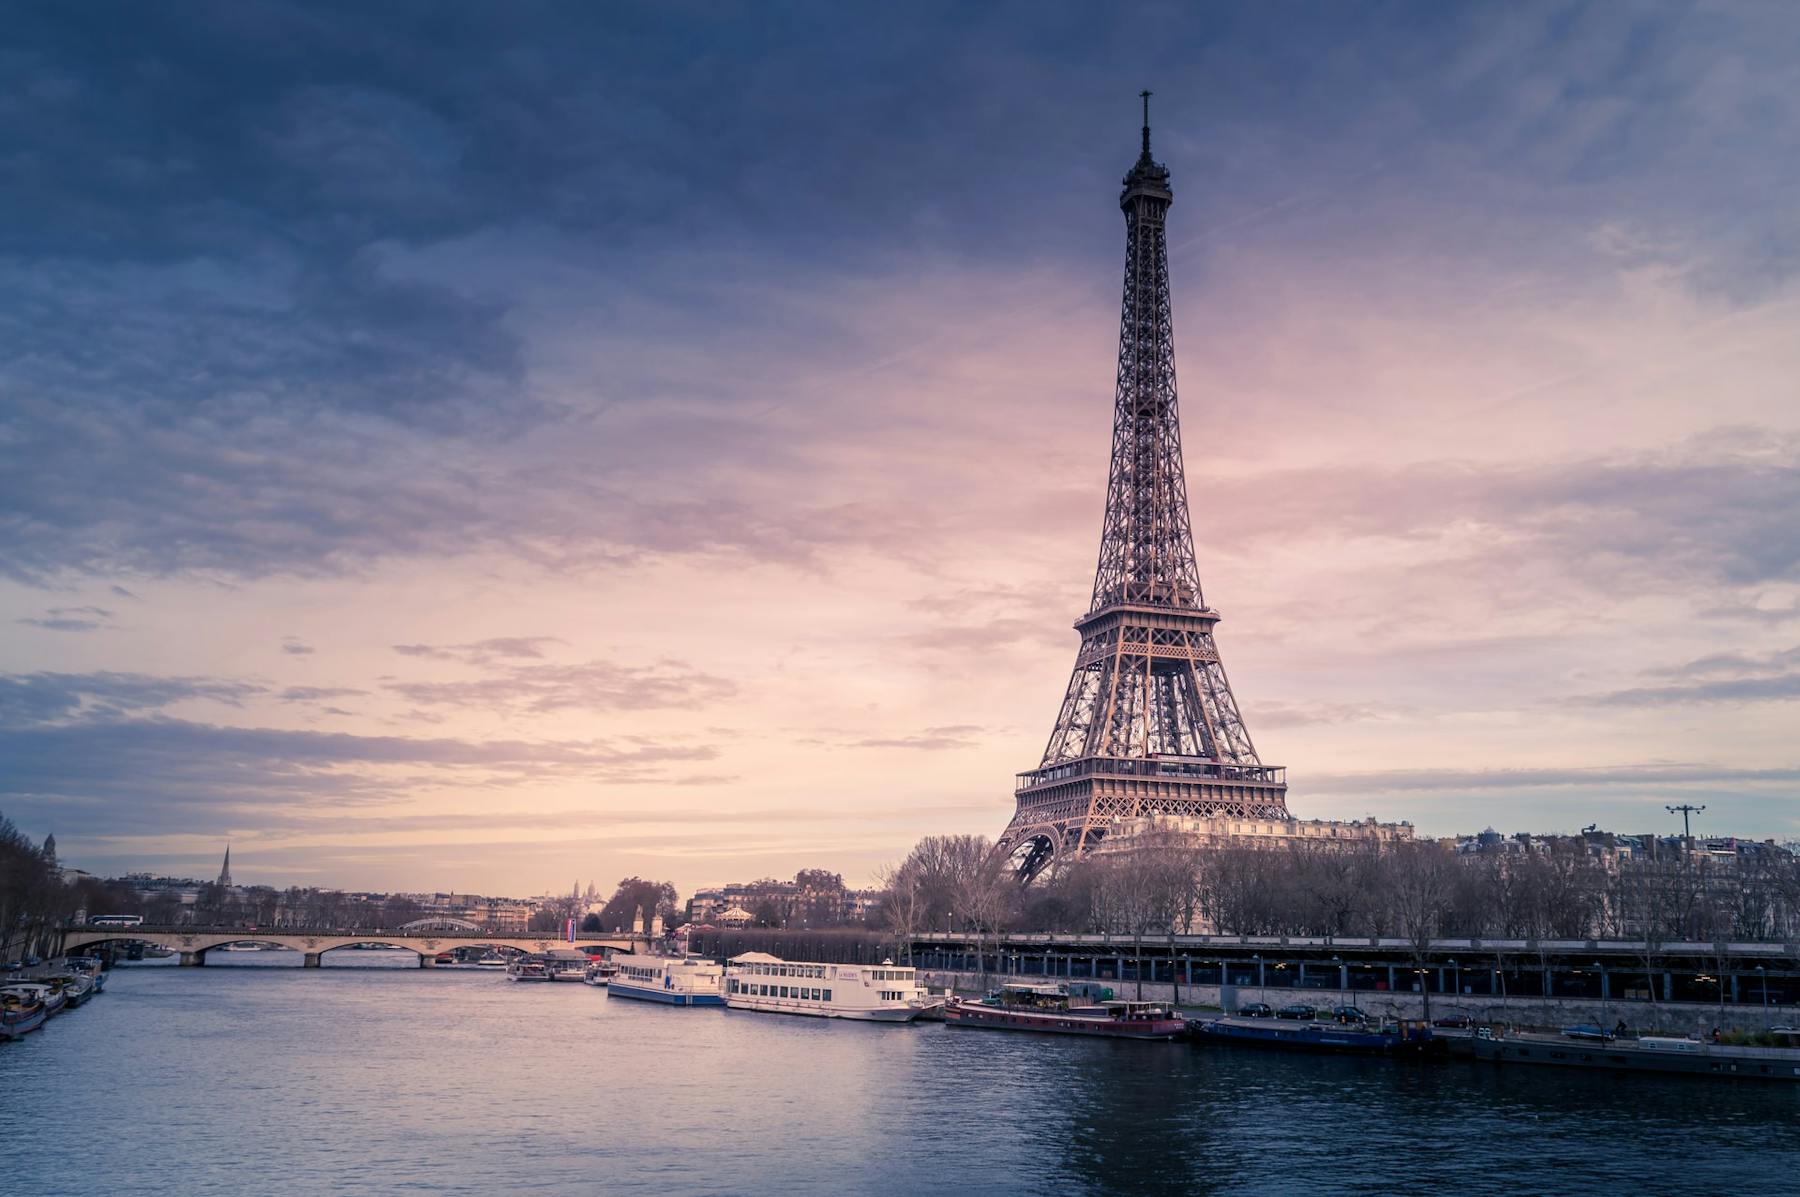 An evening view of the Eiffel Tower, Paris, France.